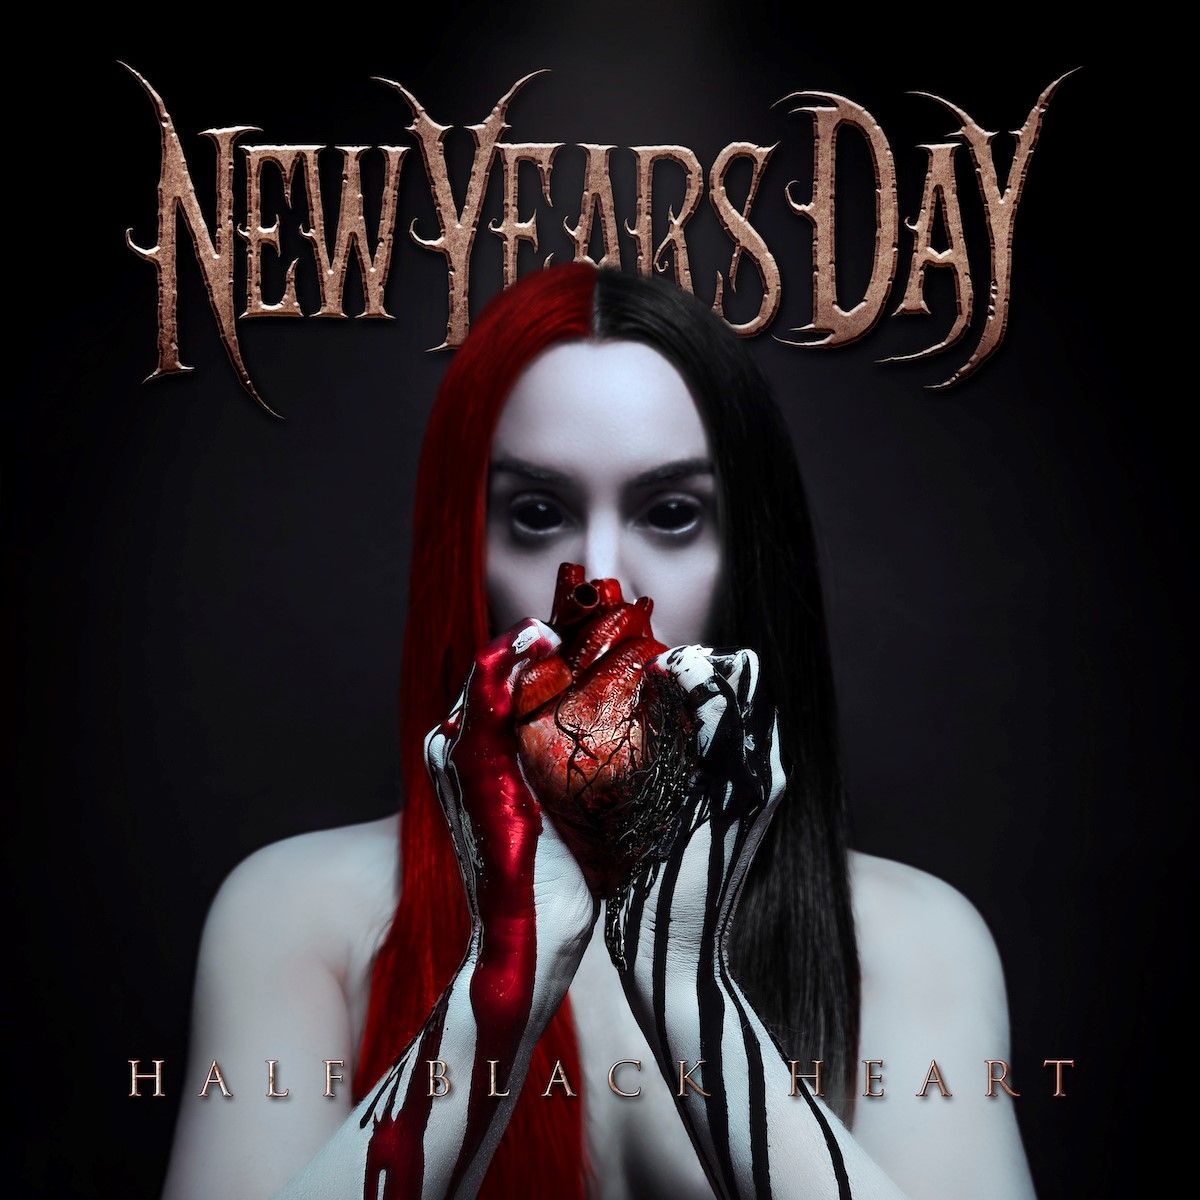 New Years Day - "Half Black Heart"